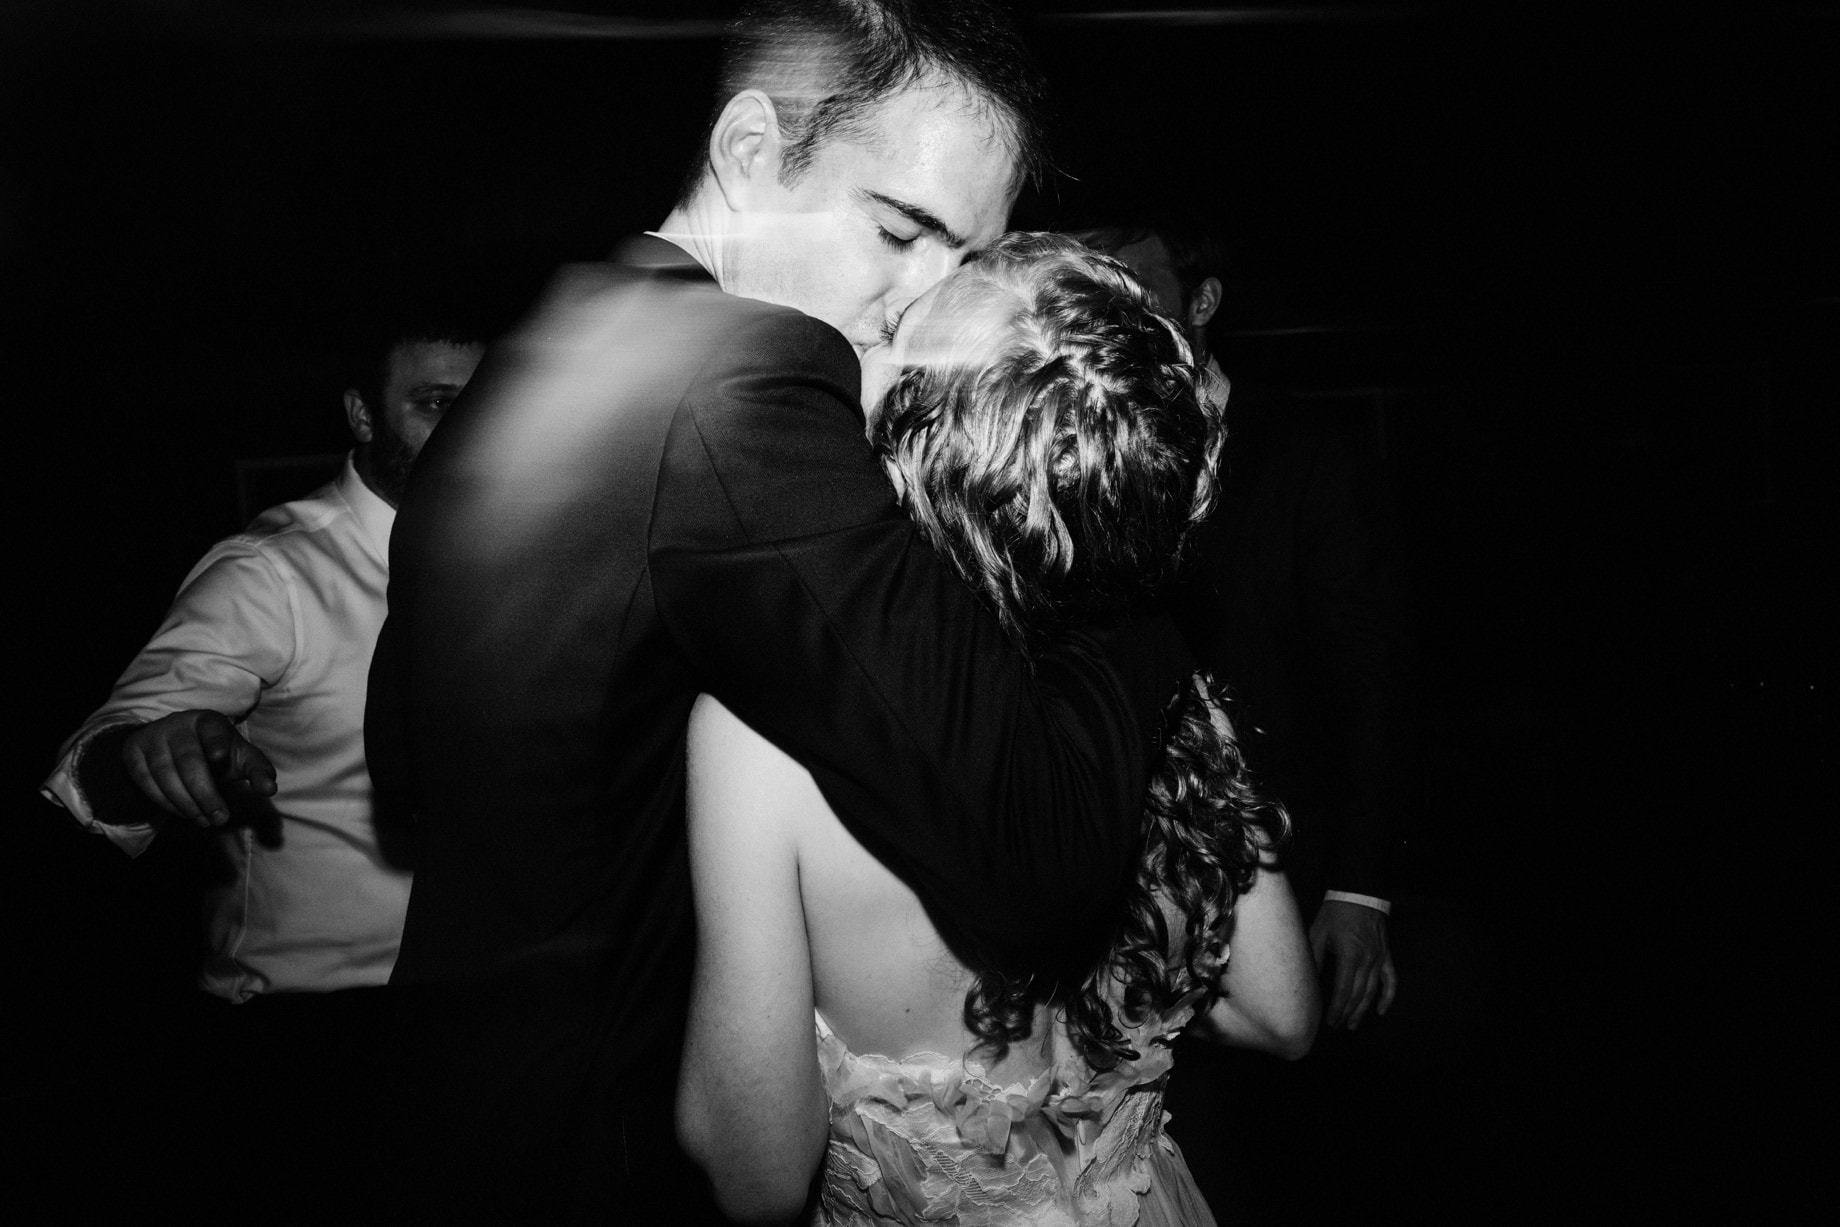 bride and groom share a kiss on the dance floor